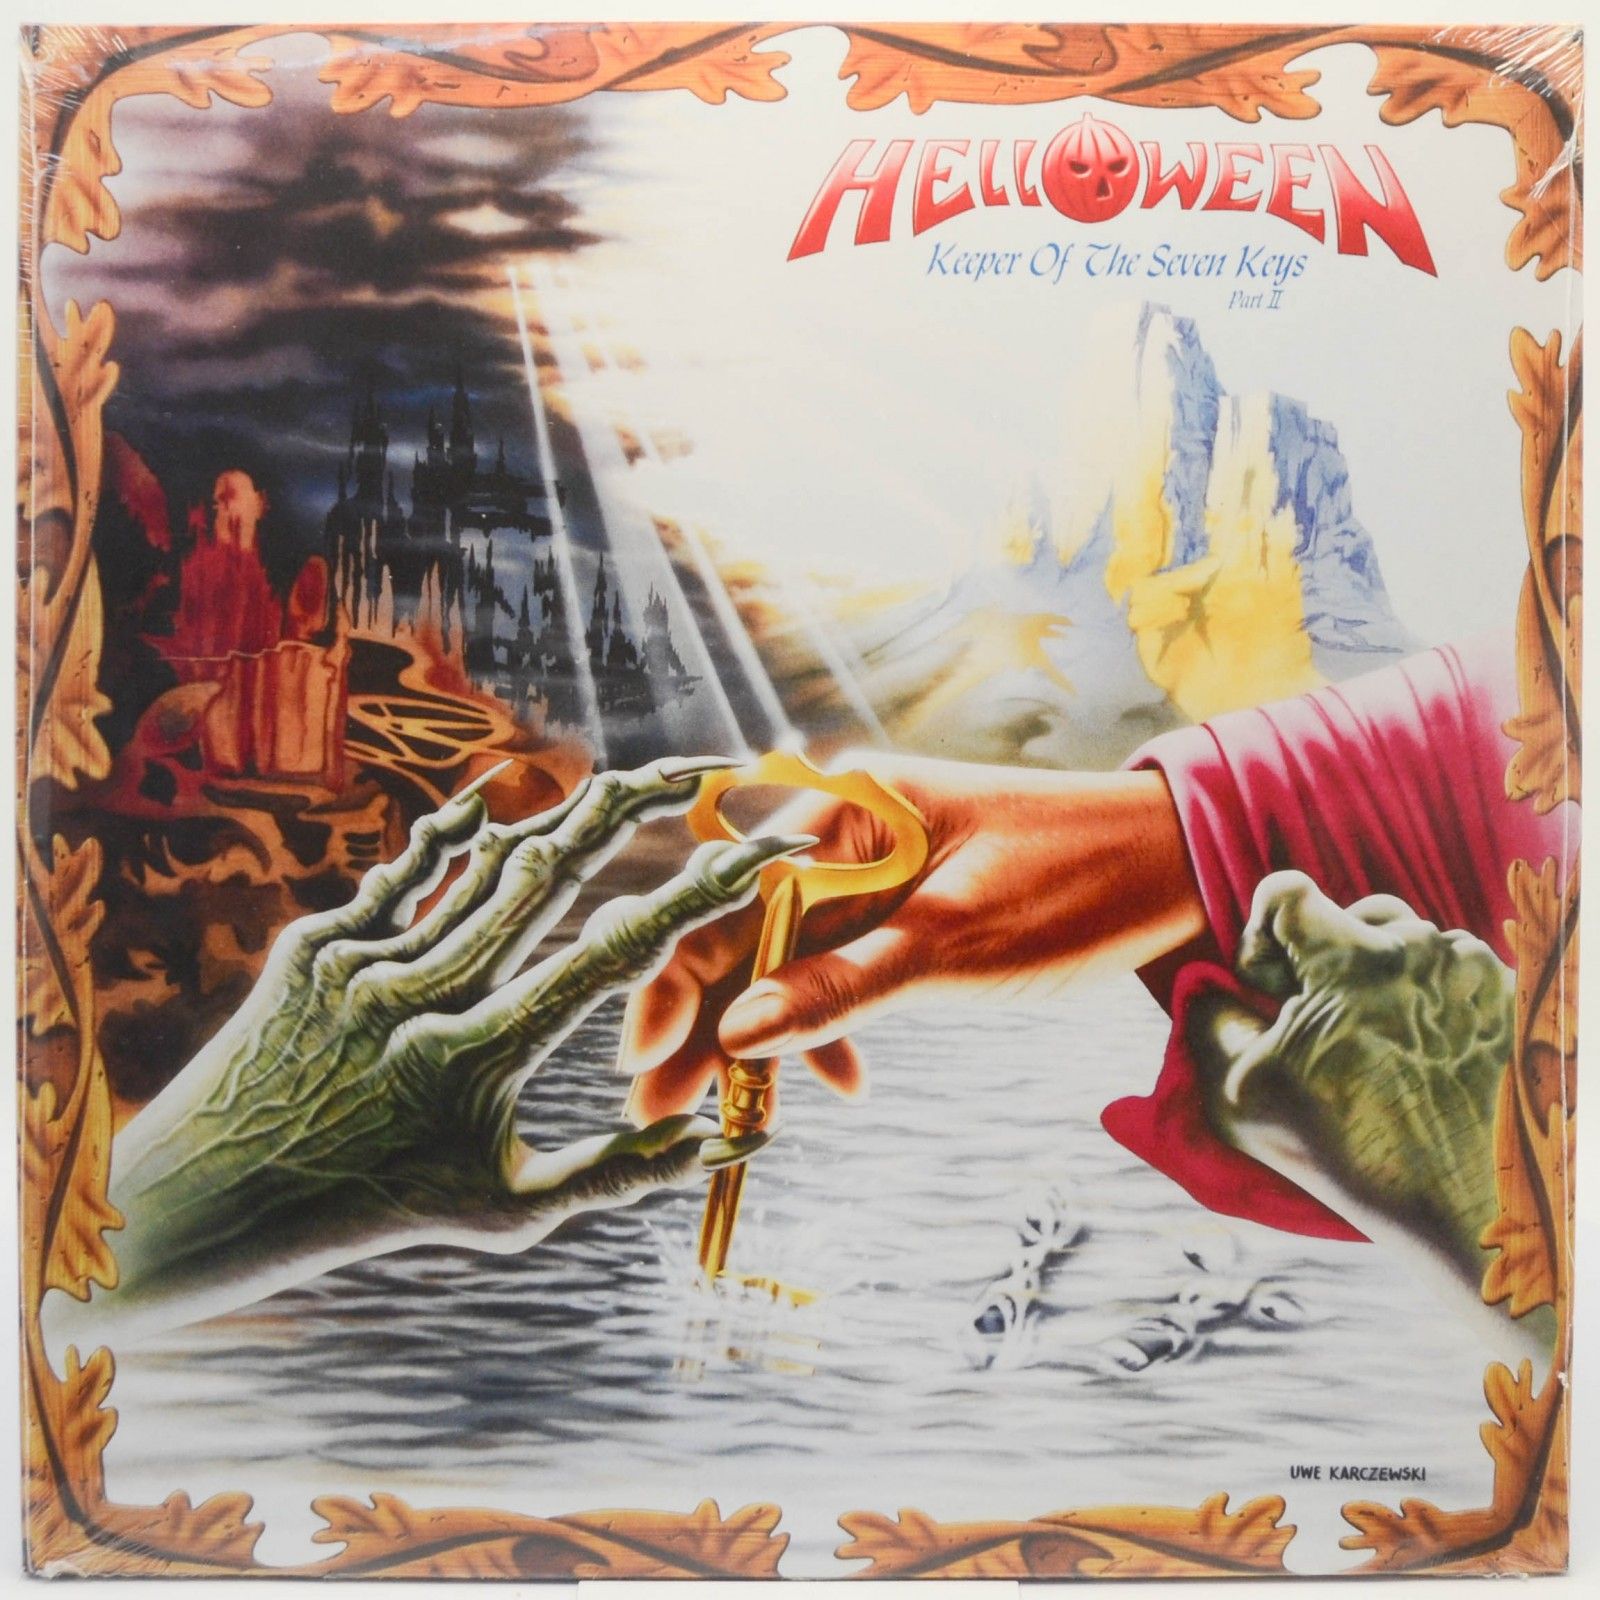 Helloween — Keeper Of The Seven Keys (Part II), 1988